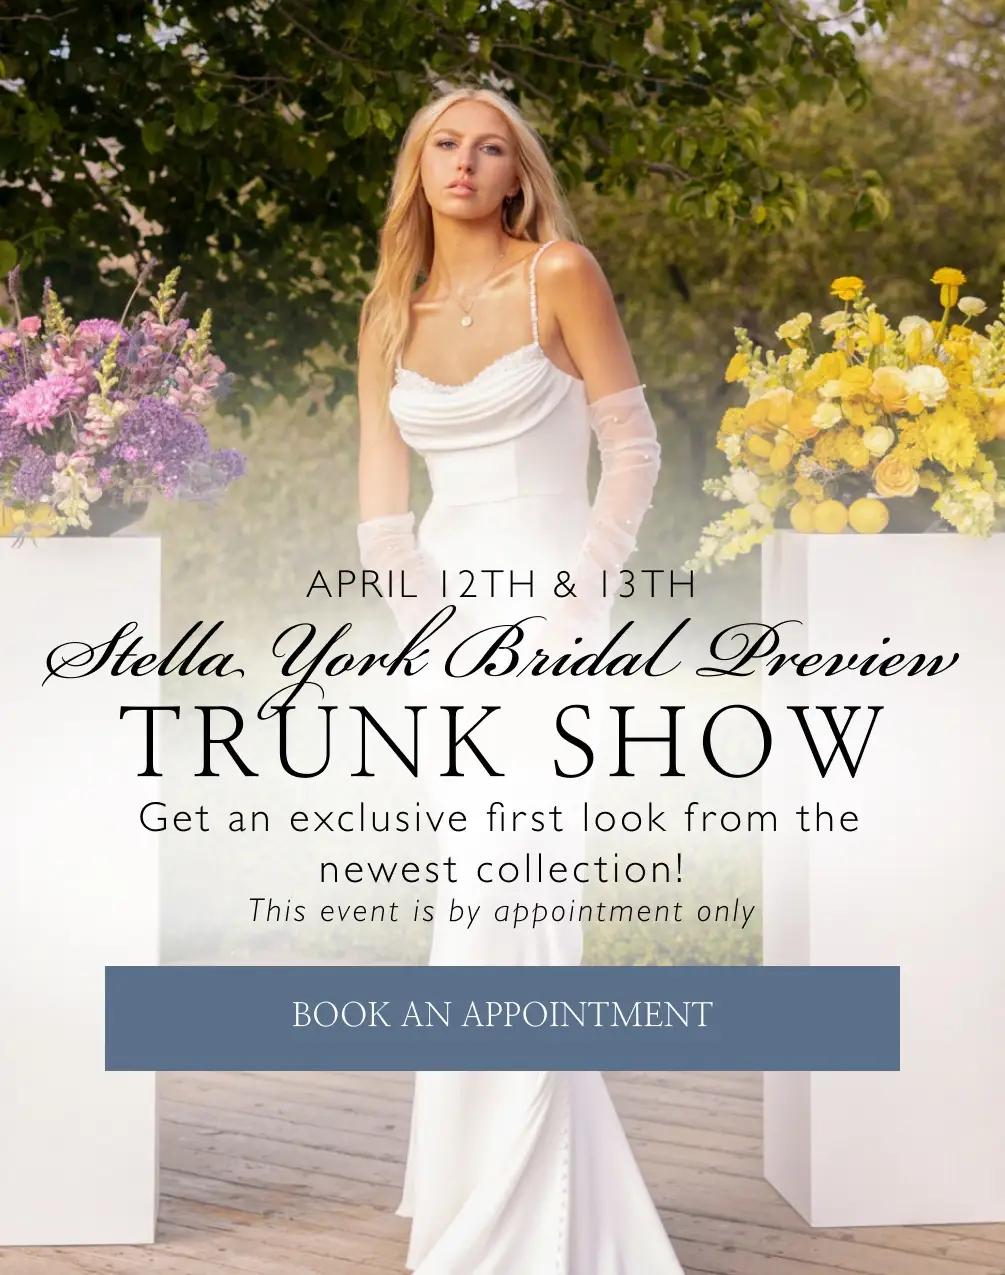 Stella York Bridal Preview Trunk Show